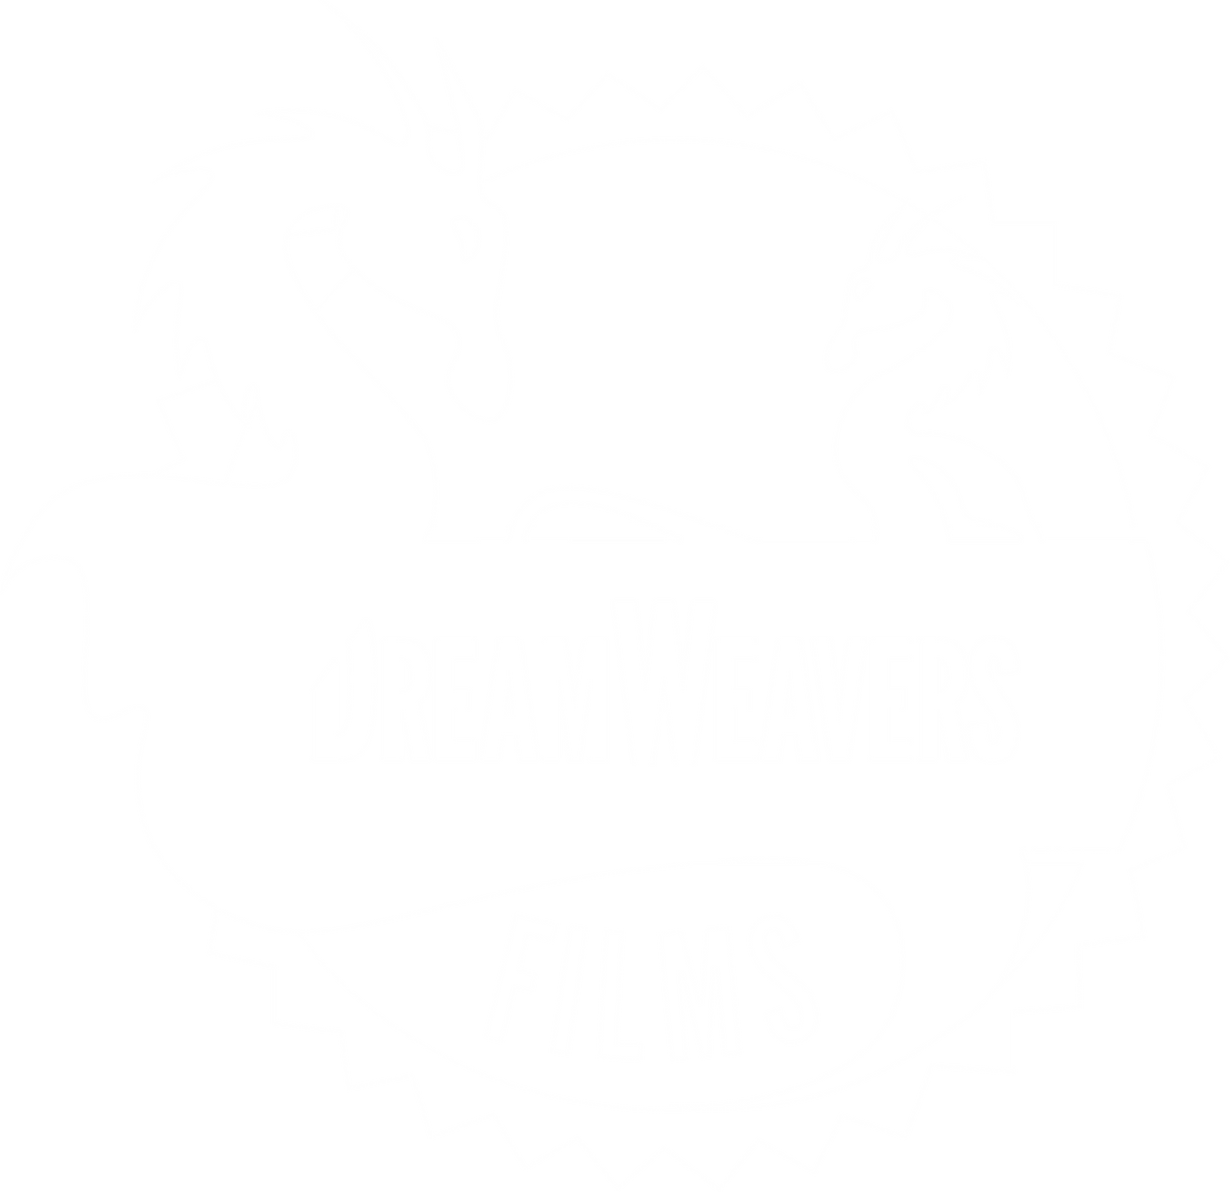 DreamWeavers Films logo